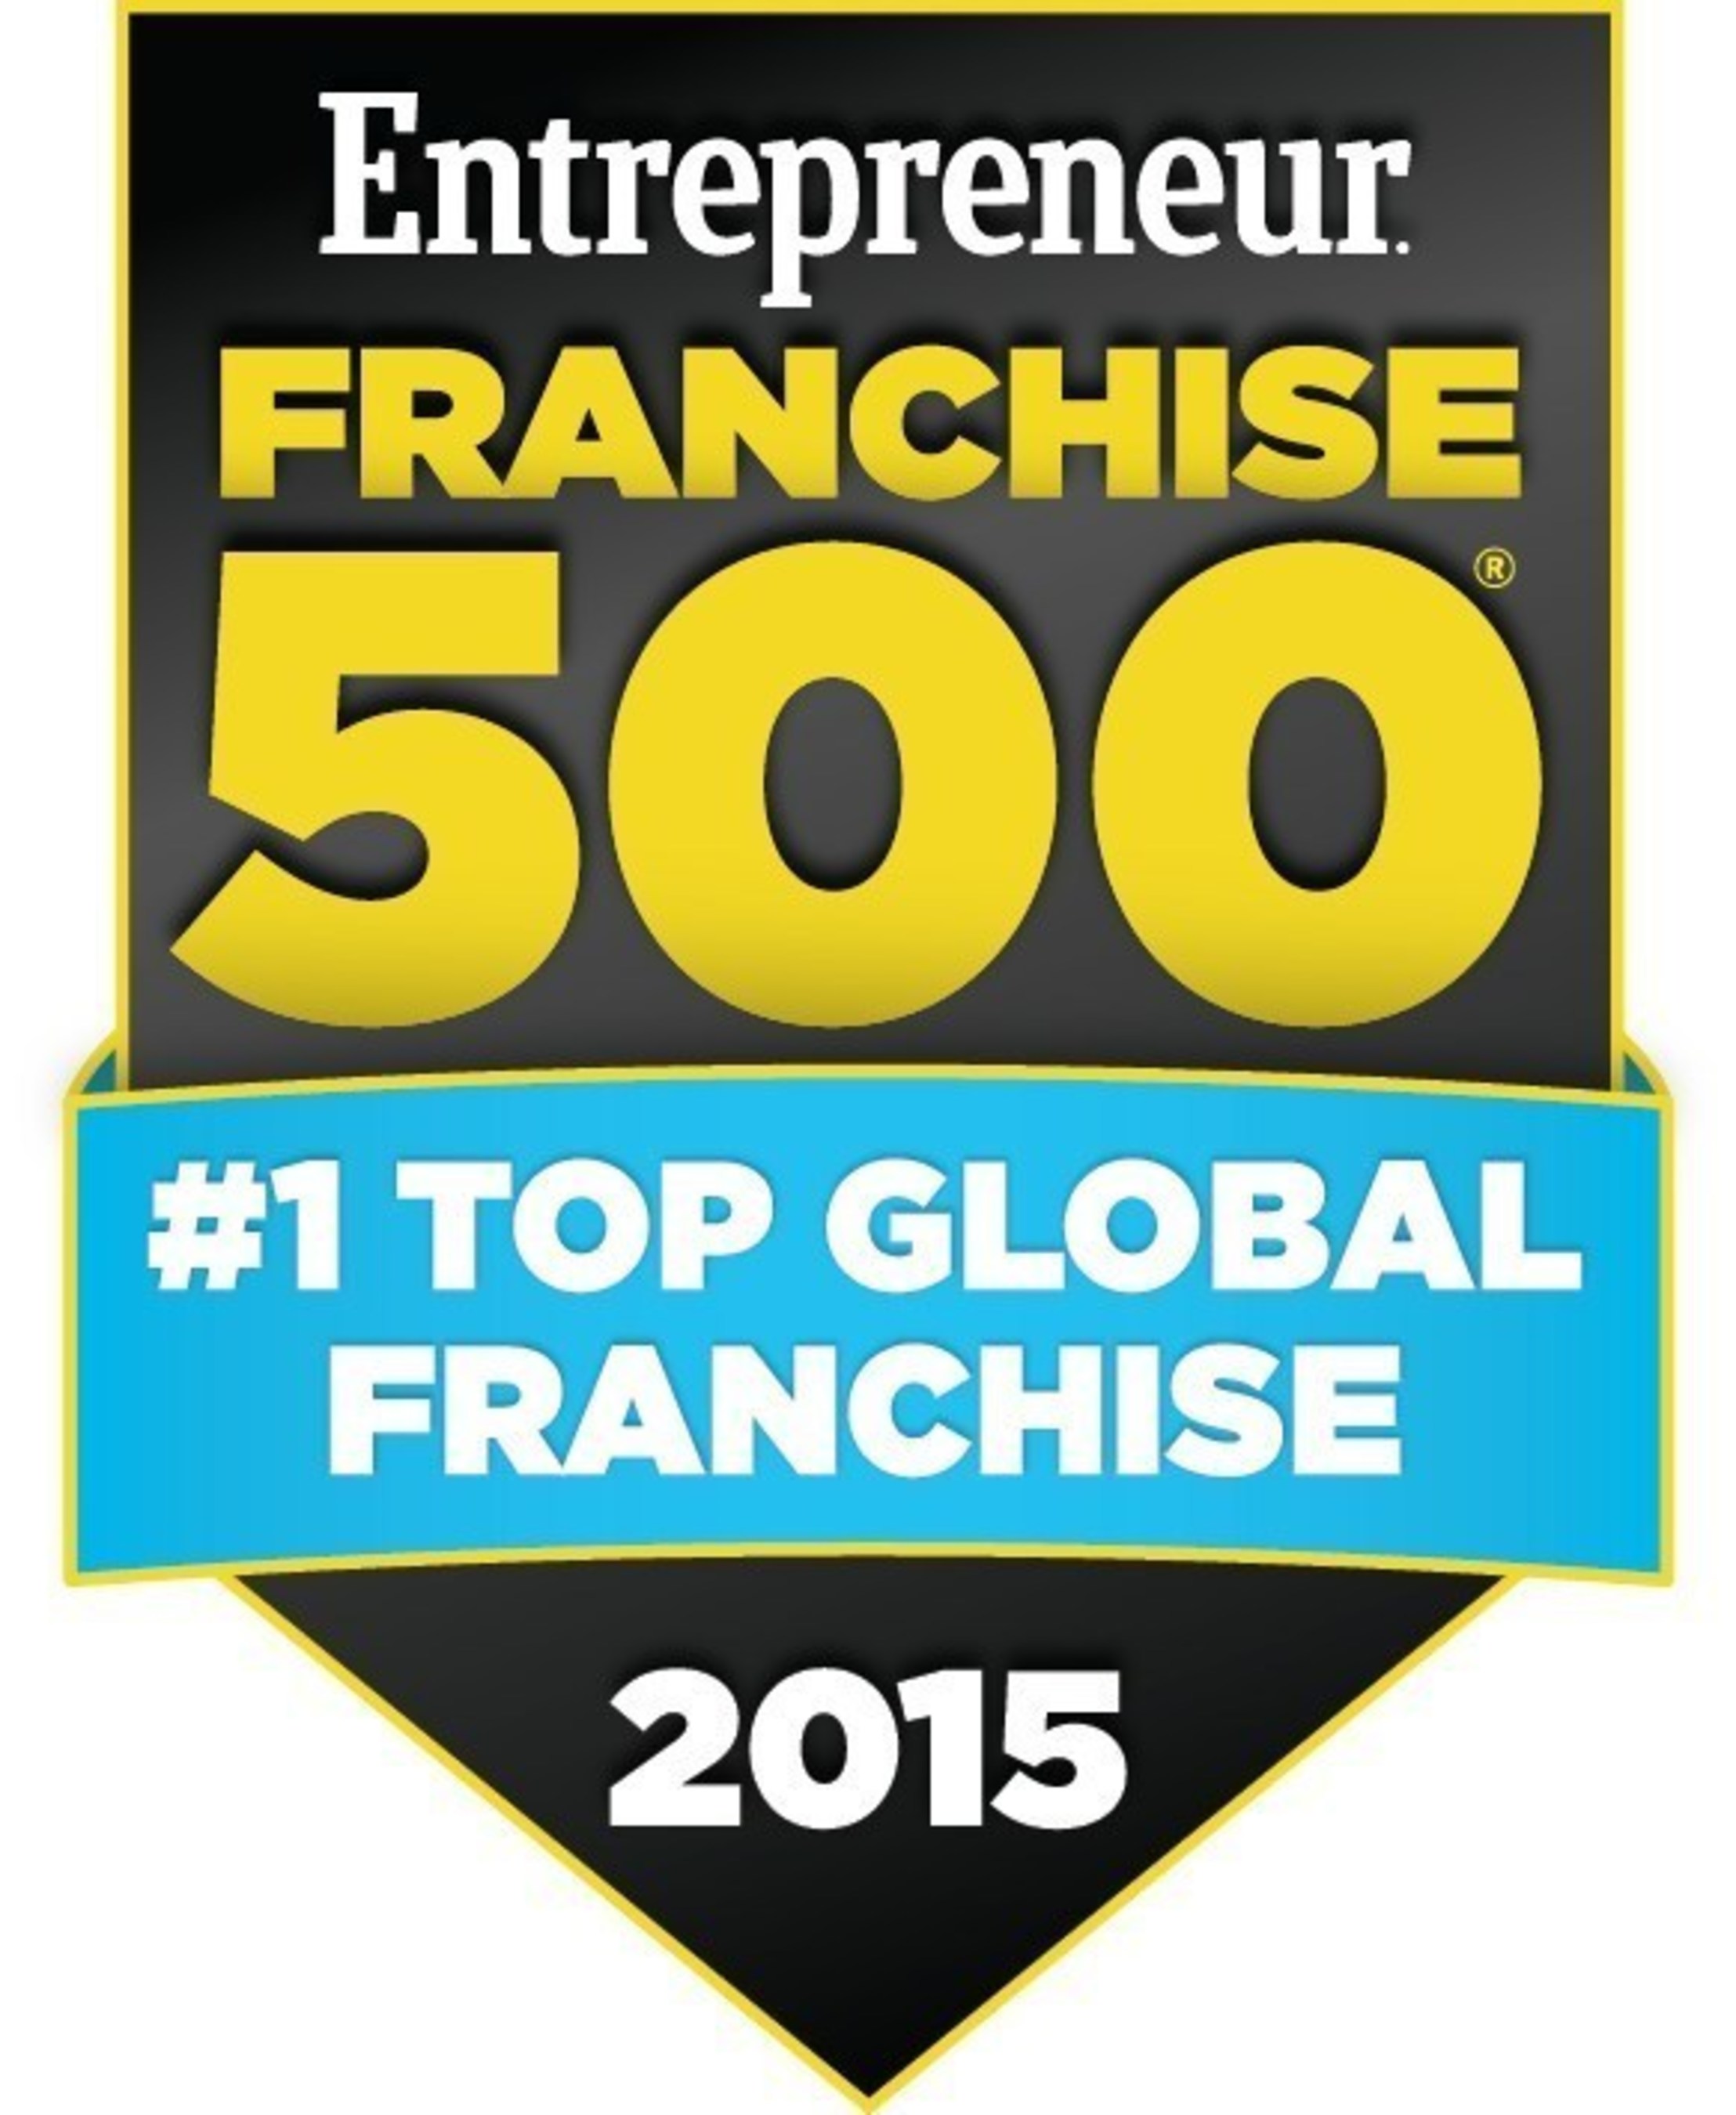 Anytime Fitness Named #1 Top Global Franchise By "Entrepreneur" Magazine